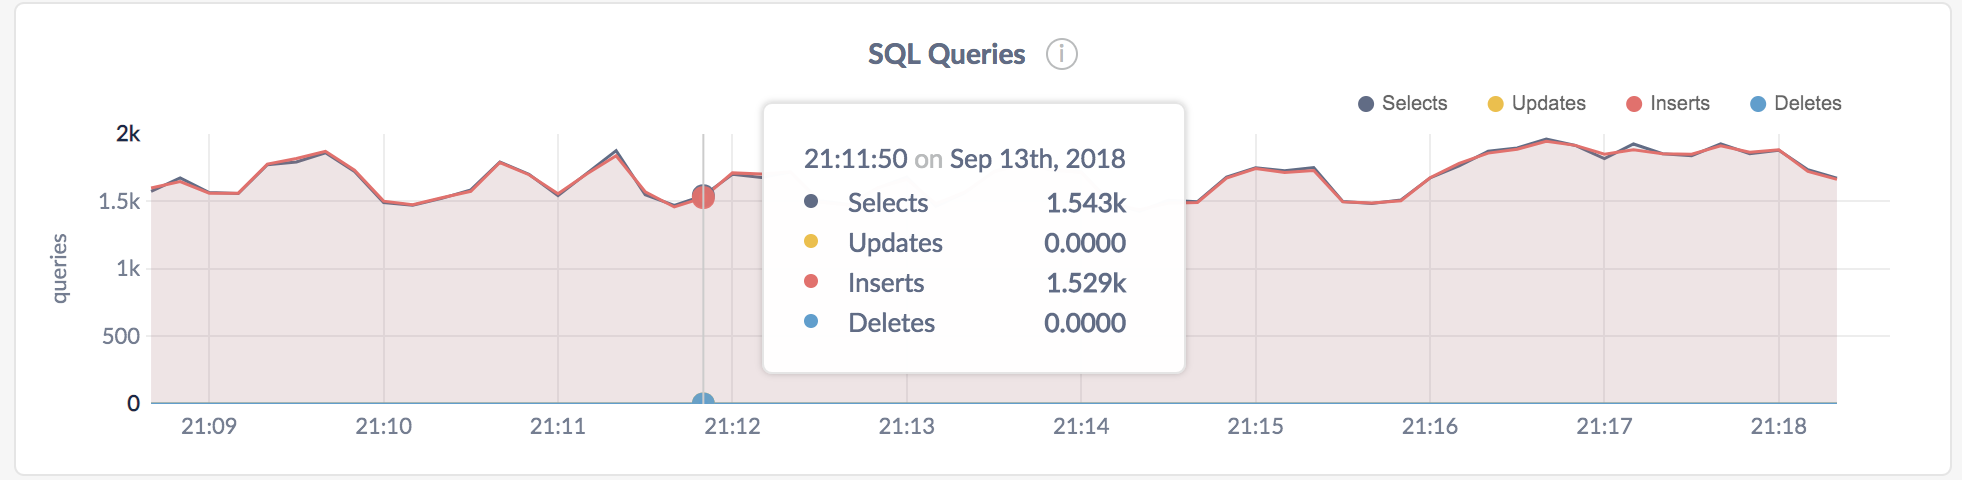 DB Console SQL Queries graph